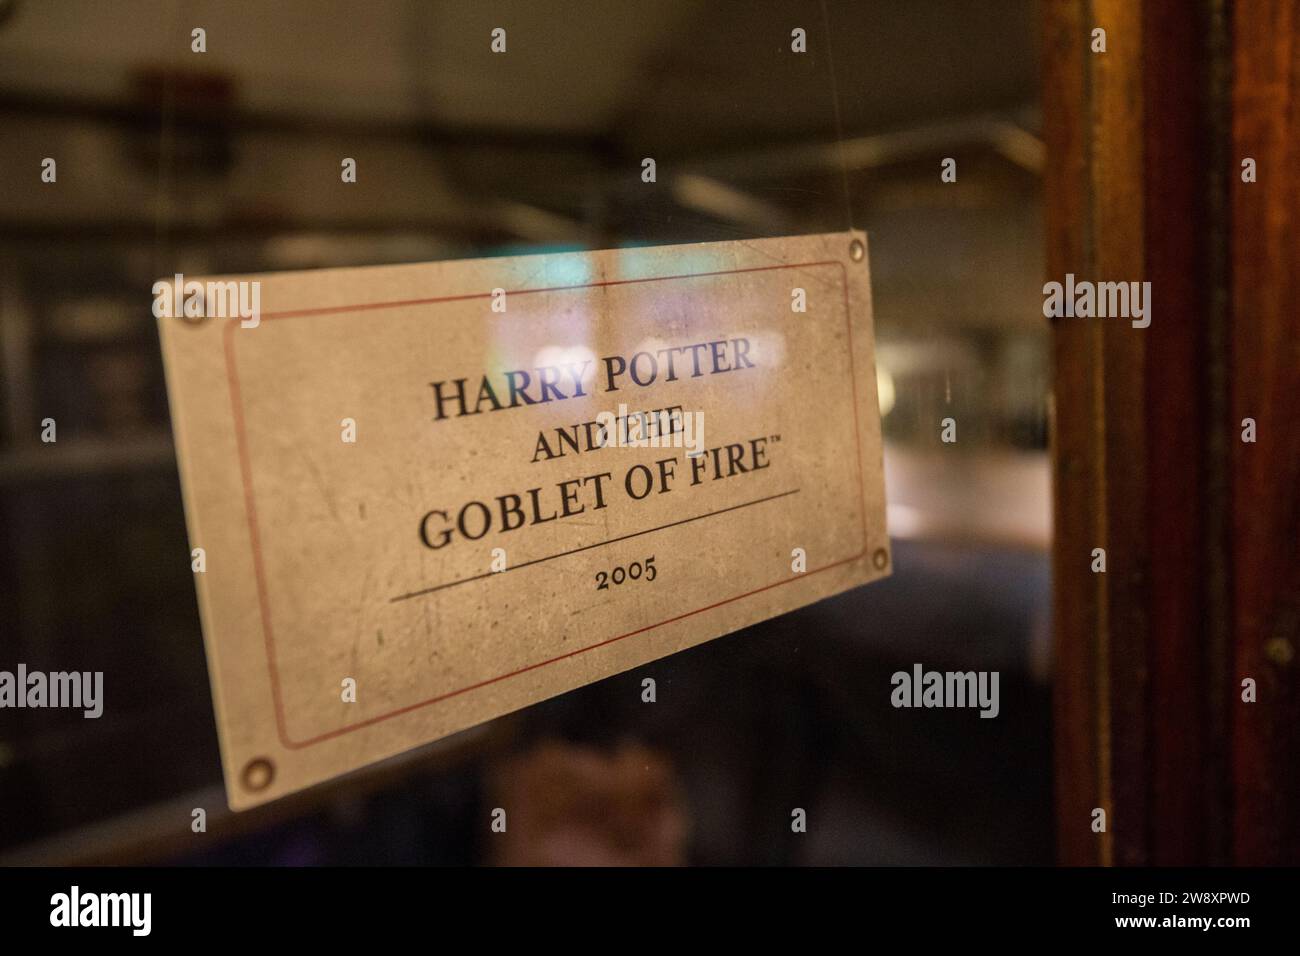 Harry Potter Studio Tour, Warner Bros Studio, London, UK Stock Photo